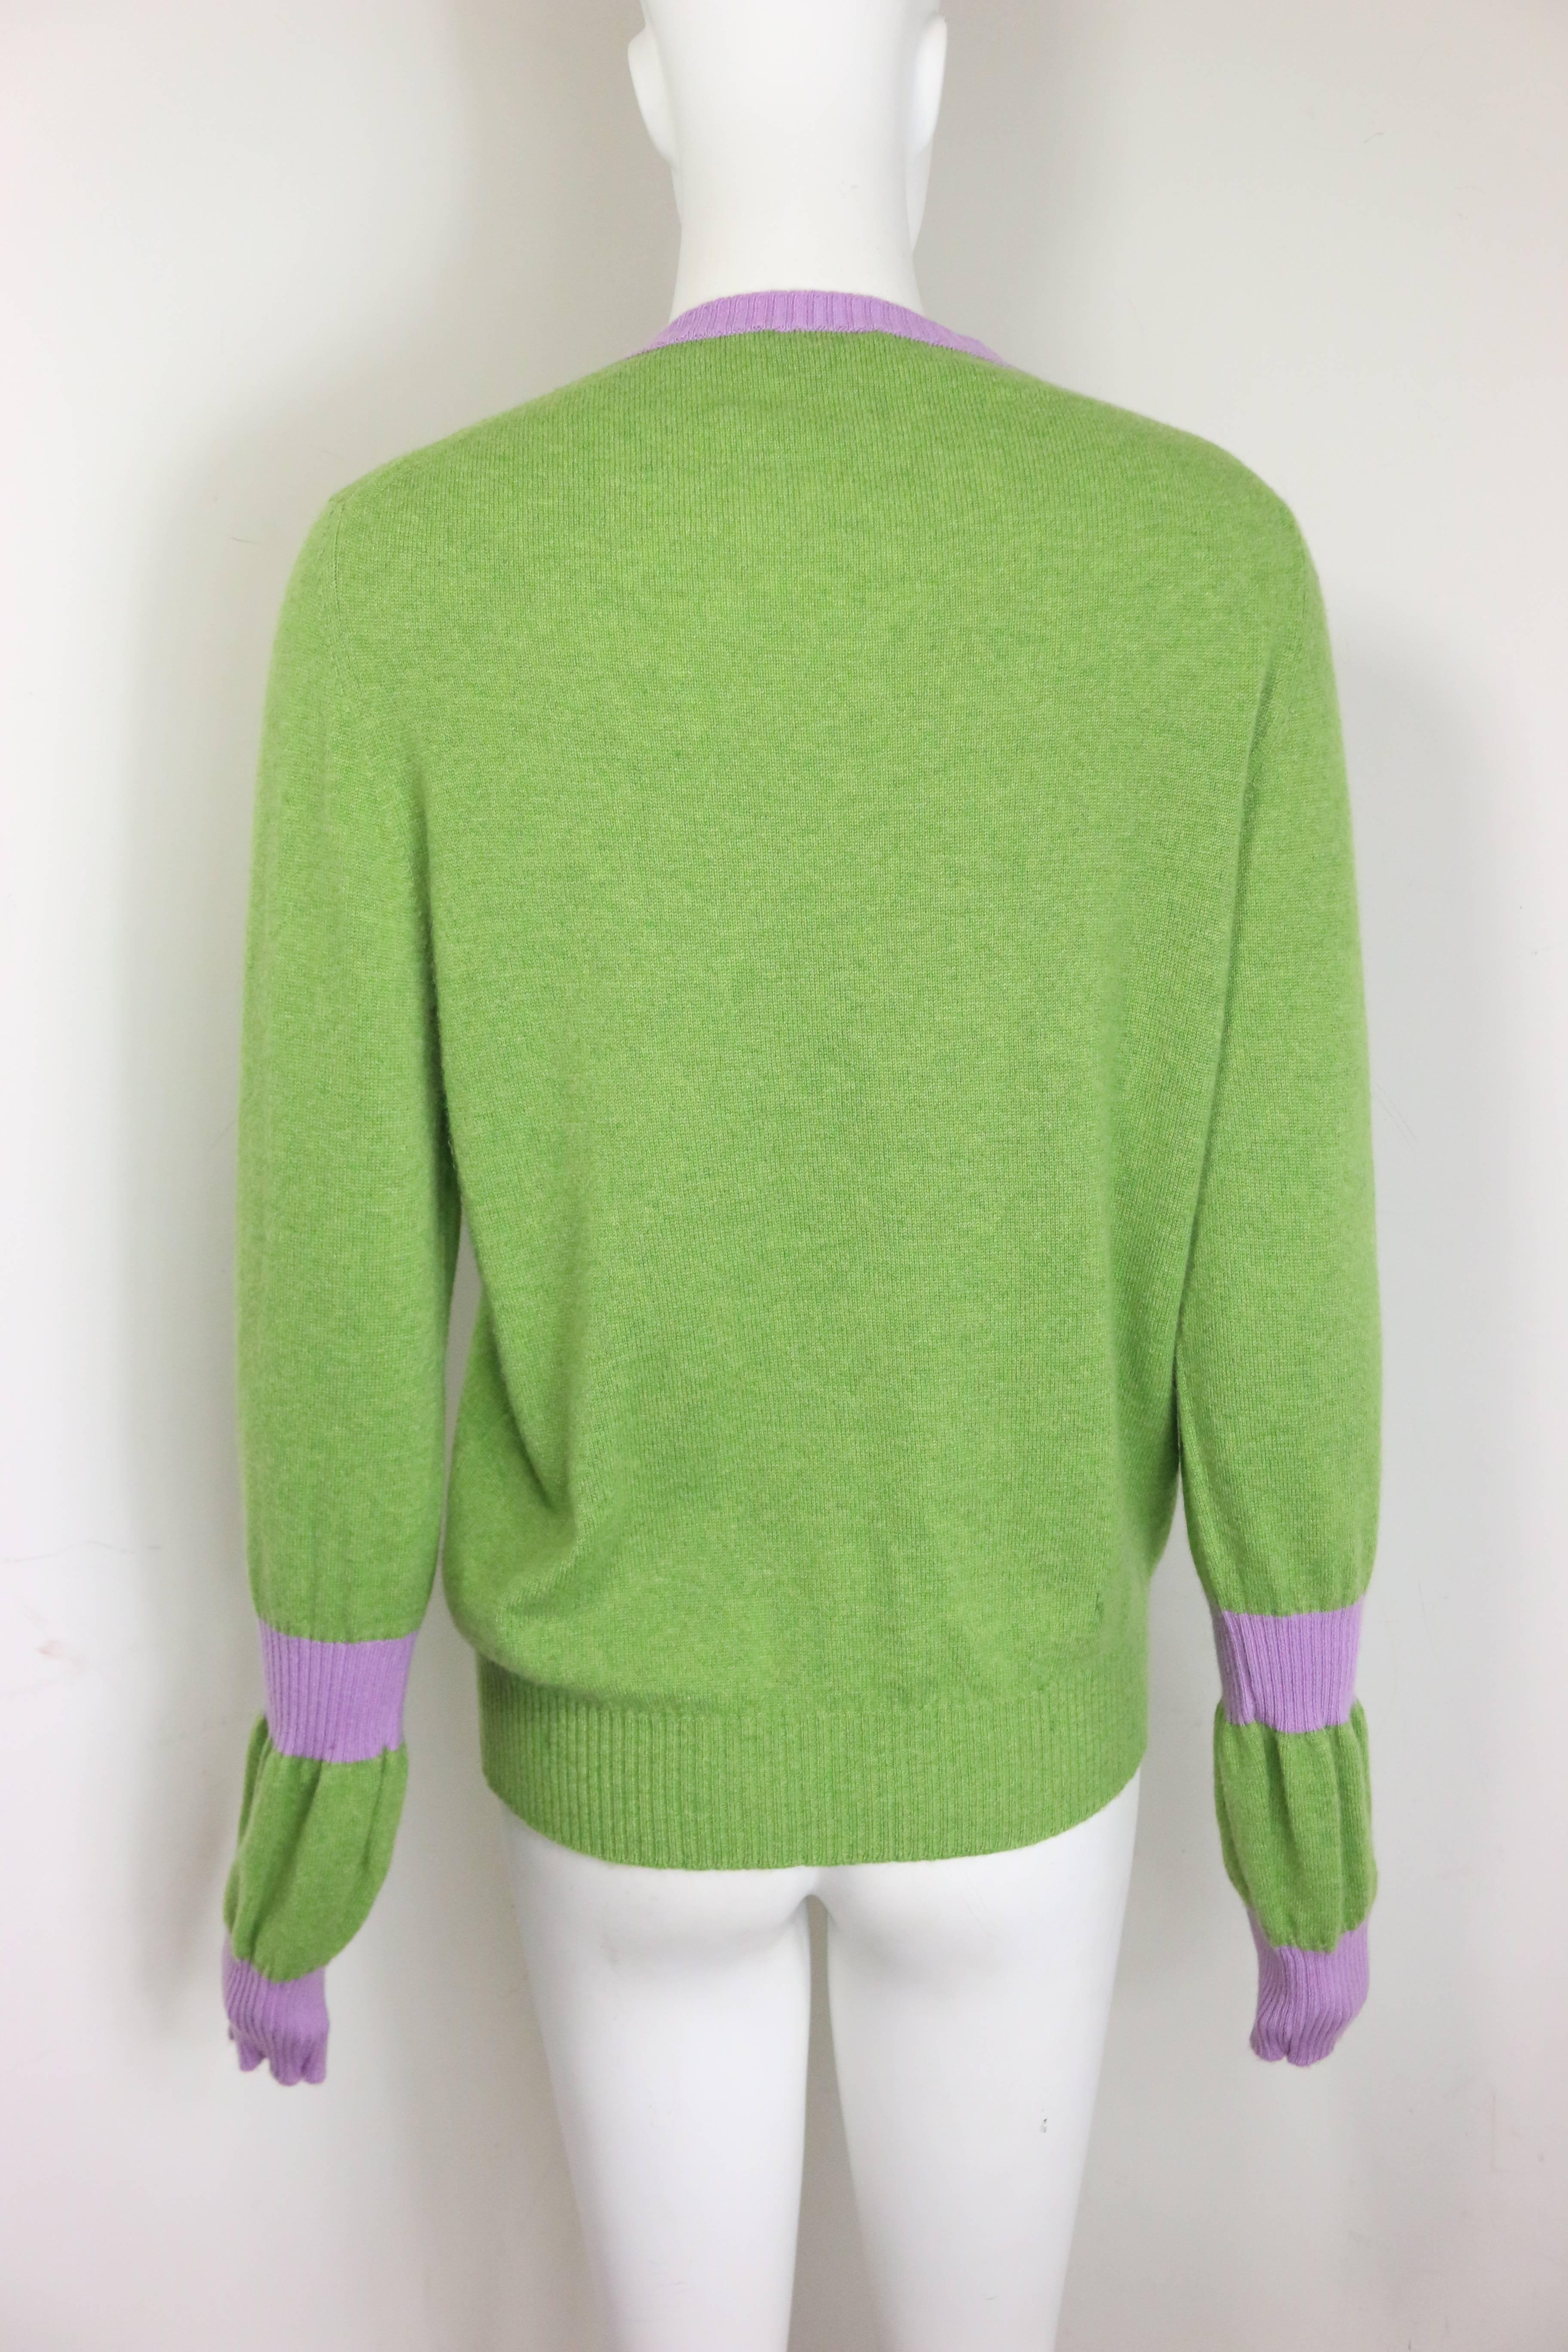 chanel green sweater